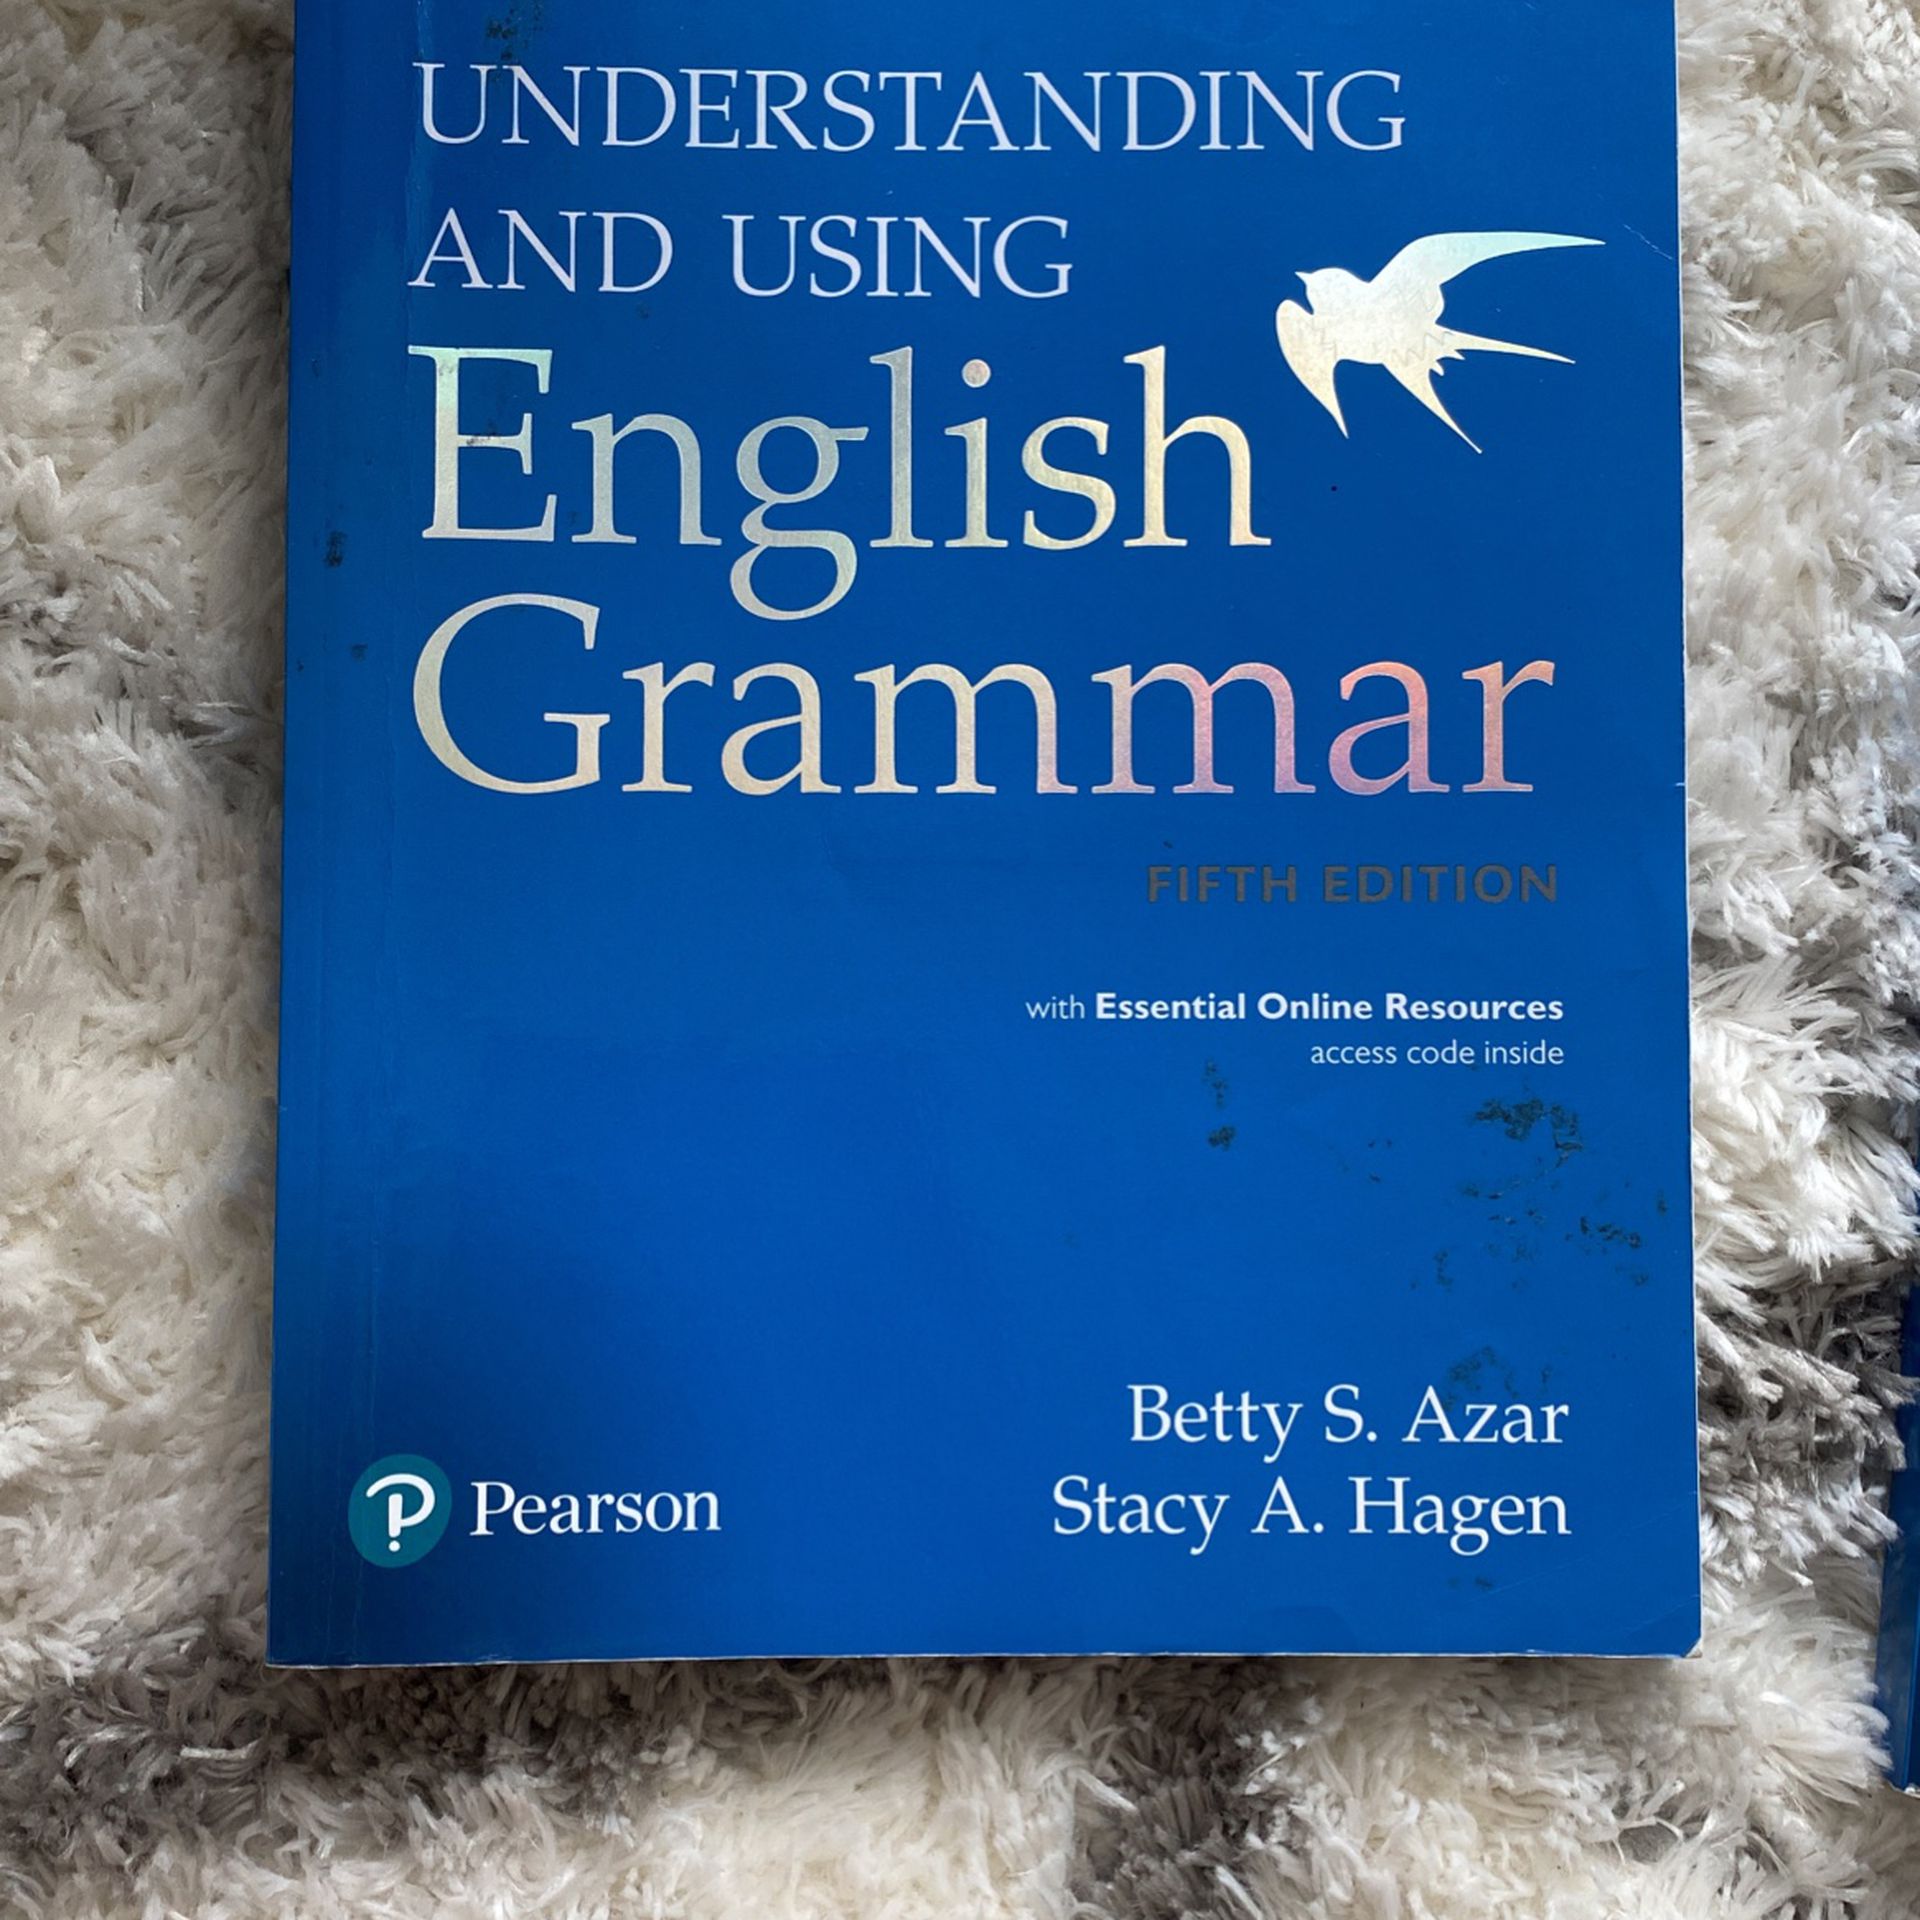 CA　Santee,　Grammar　in　OfferUp　for　Book　English　Sale